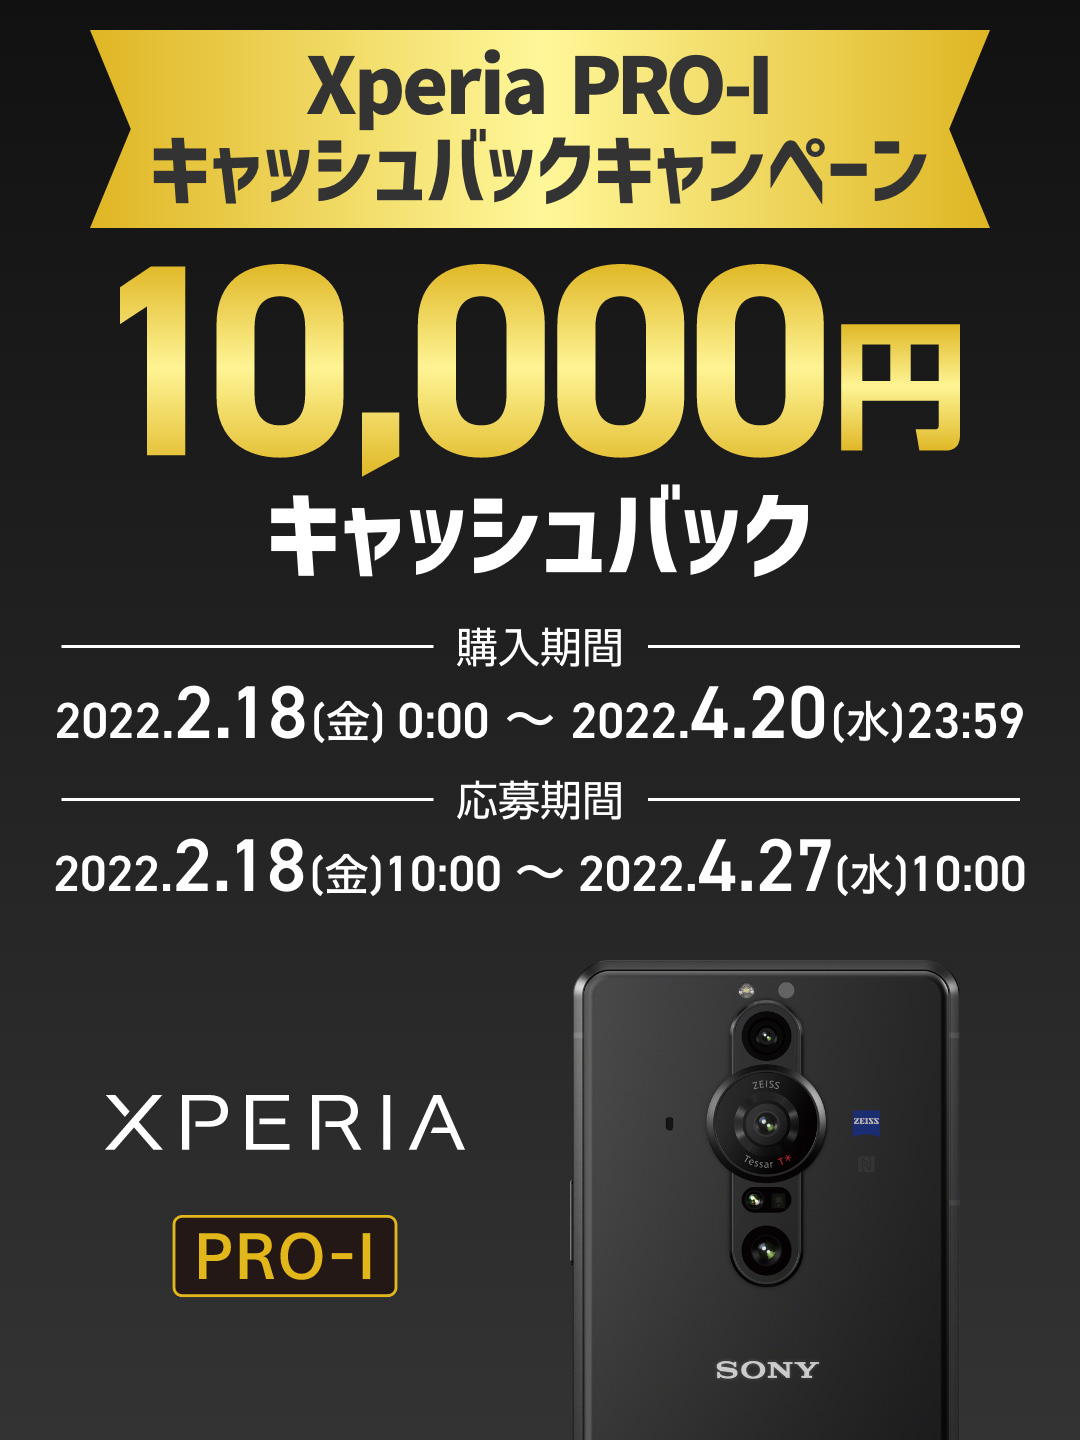 Xperia PRO-Iキャッシュバックキャンペーン 10,000円キャッシュバック 購入期間：2022.2.18[金]0:00～2022.4.20[水]23:59 応募期間：2022.2.18[金]10:00～2022.4.27[水]10:00